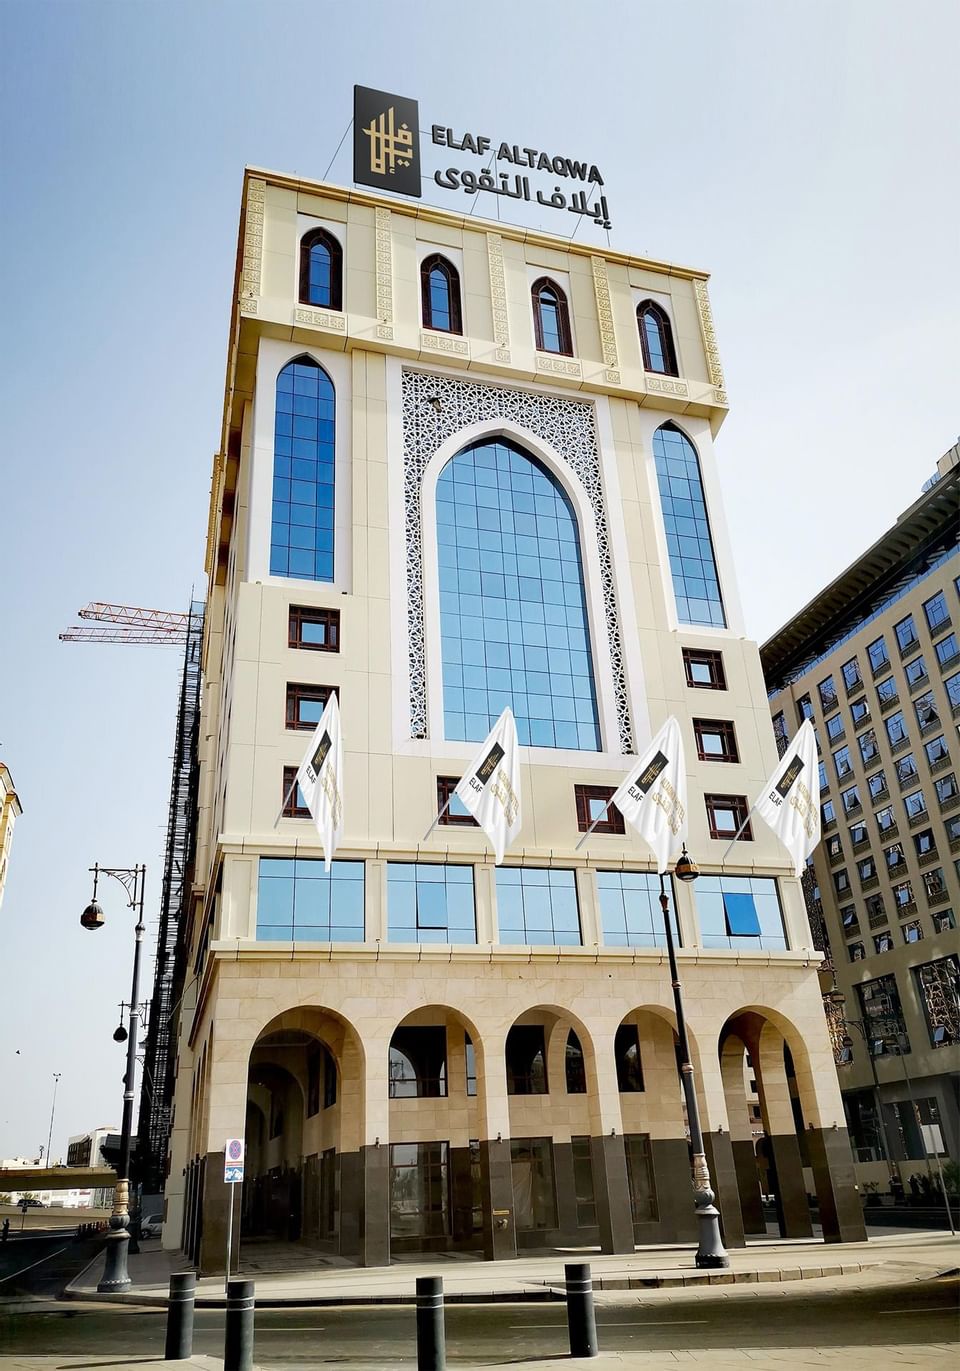 Low angle exterior view of Elaf Al Taqwa Hotel